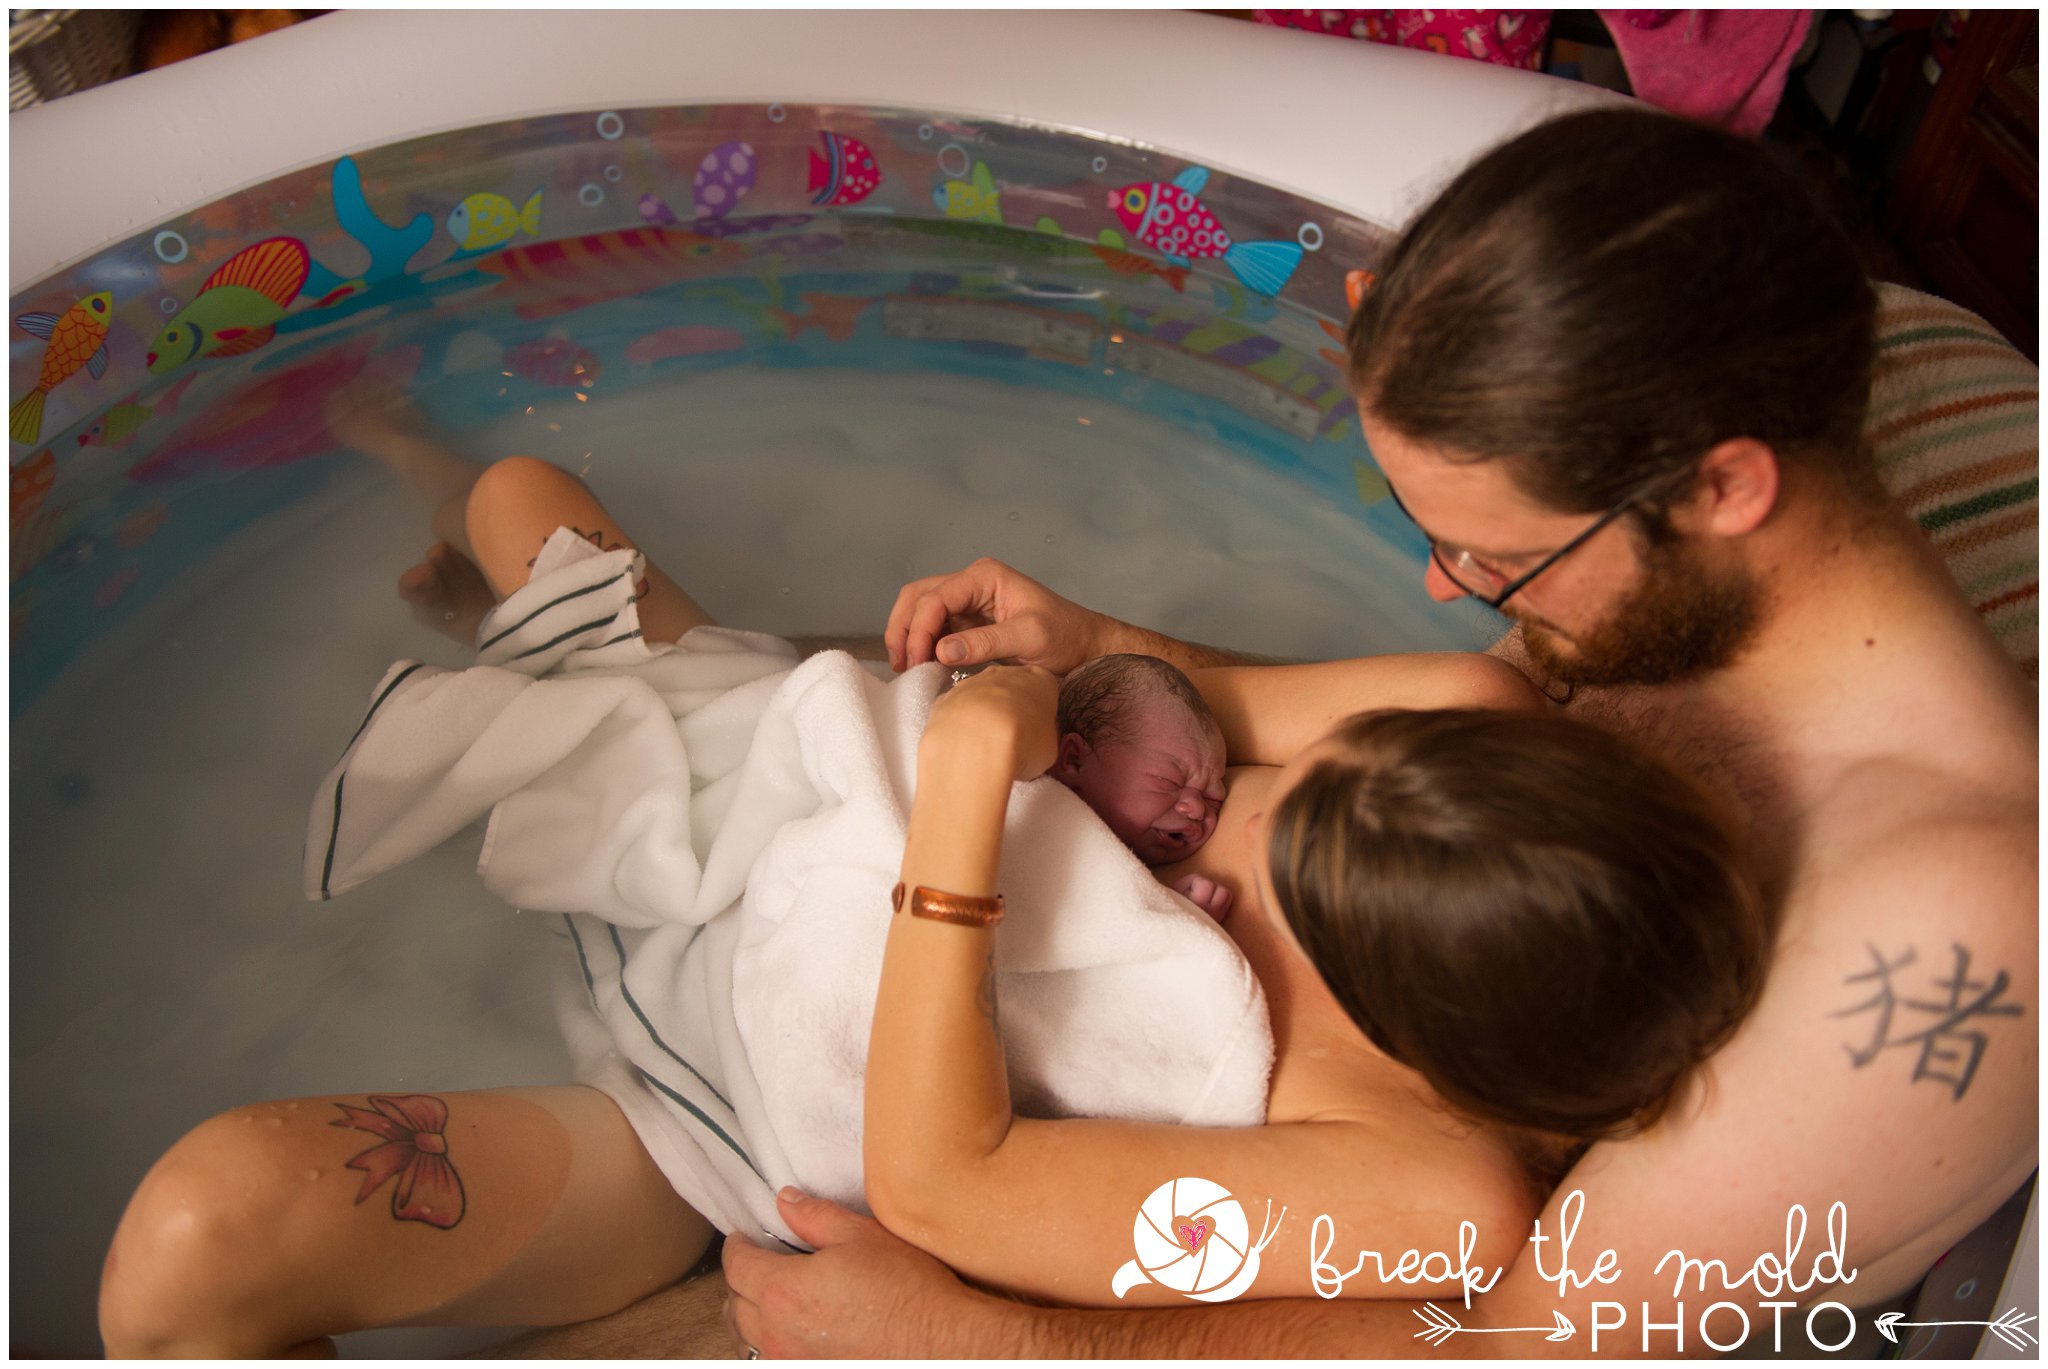 break-the-mold-photo-birth-story-home-water-birth-photo_5721.jpg